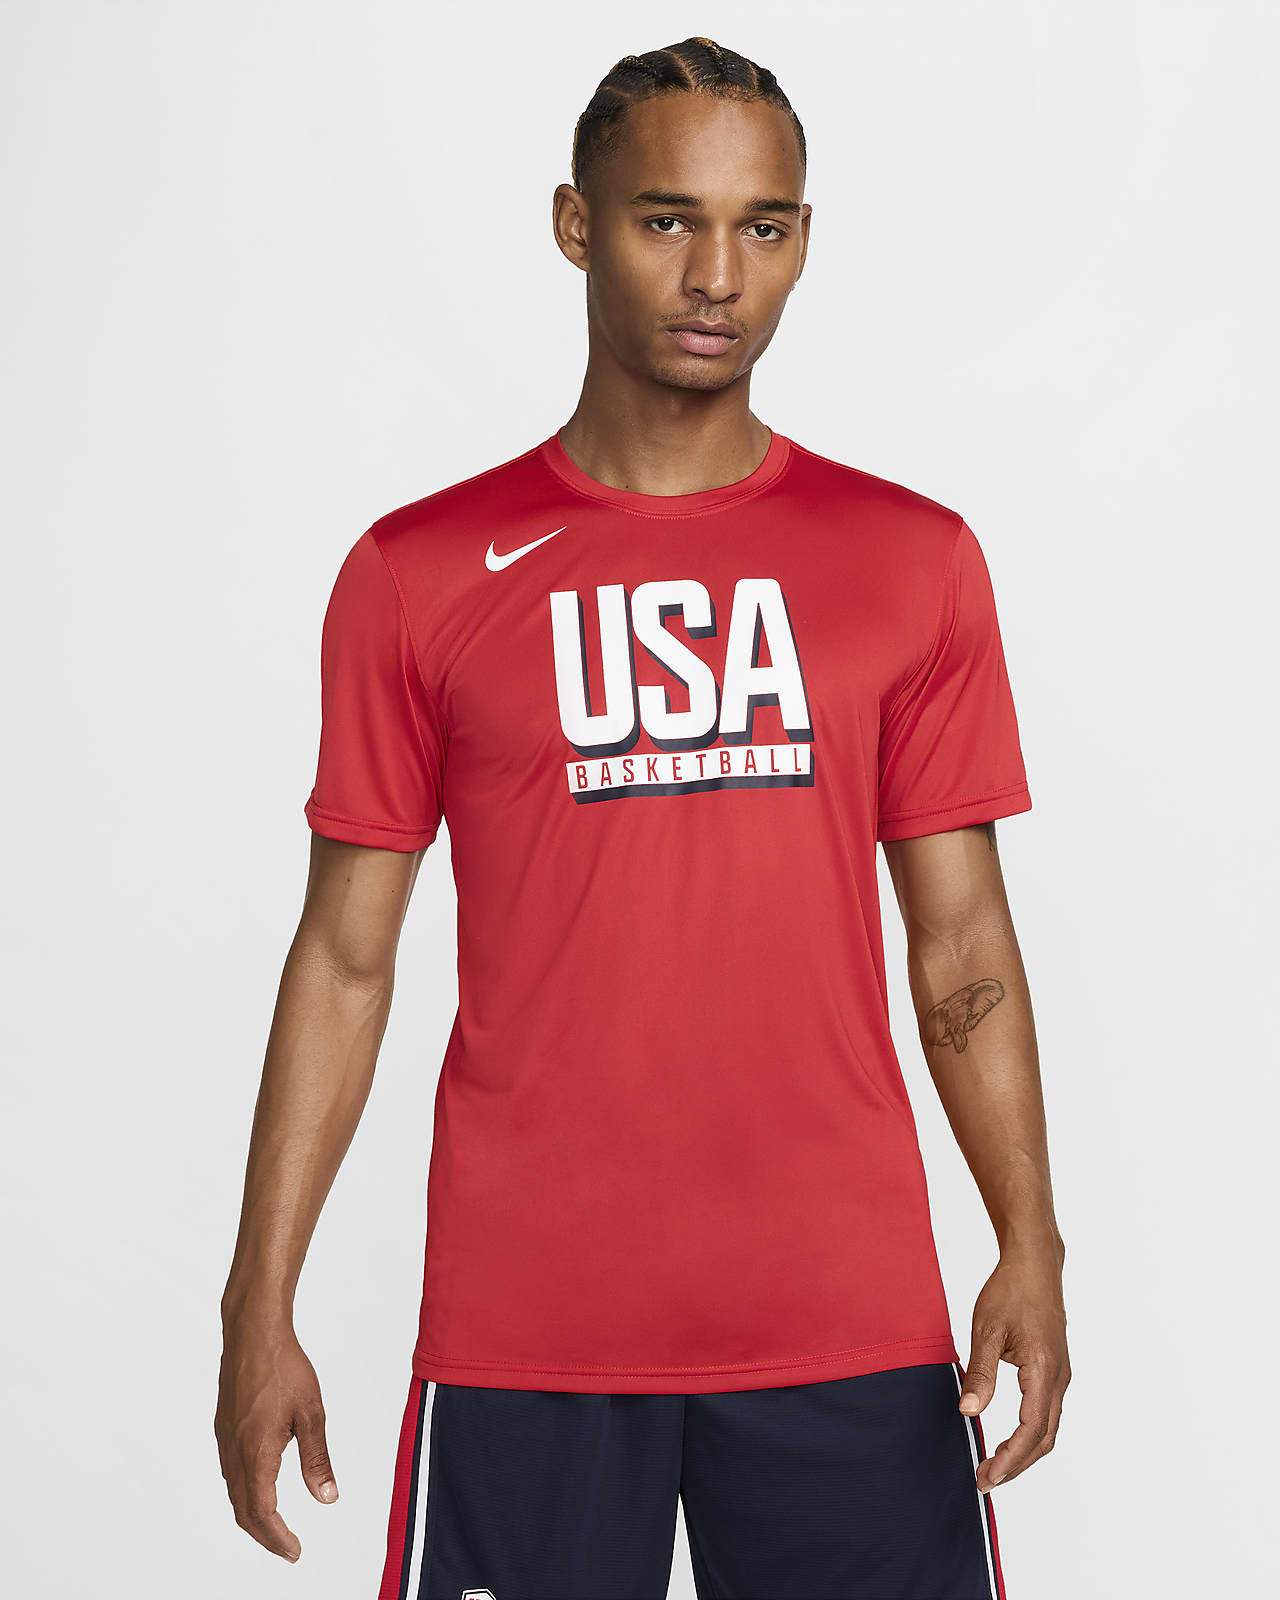 USA Training Men's Nike Basketball T-Shirt